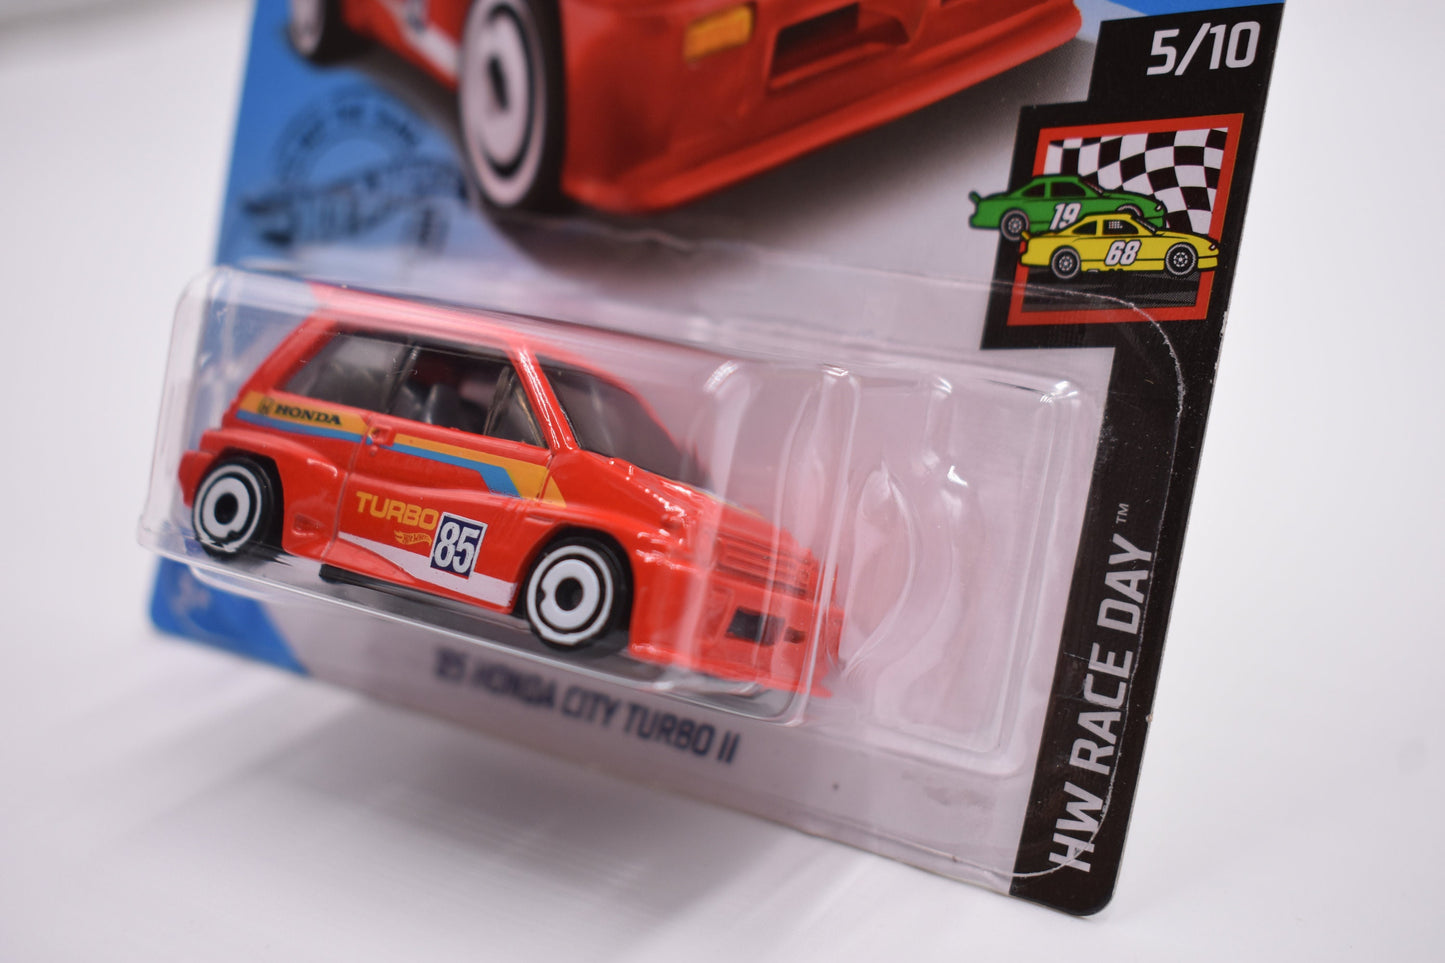 Hot Wheels '85 Honda City Turbo II Red HW Race Day Perfect Birthday Gift Miniature Model Toy Car